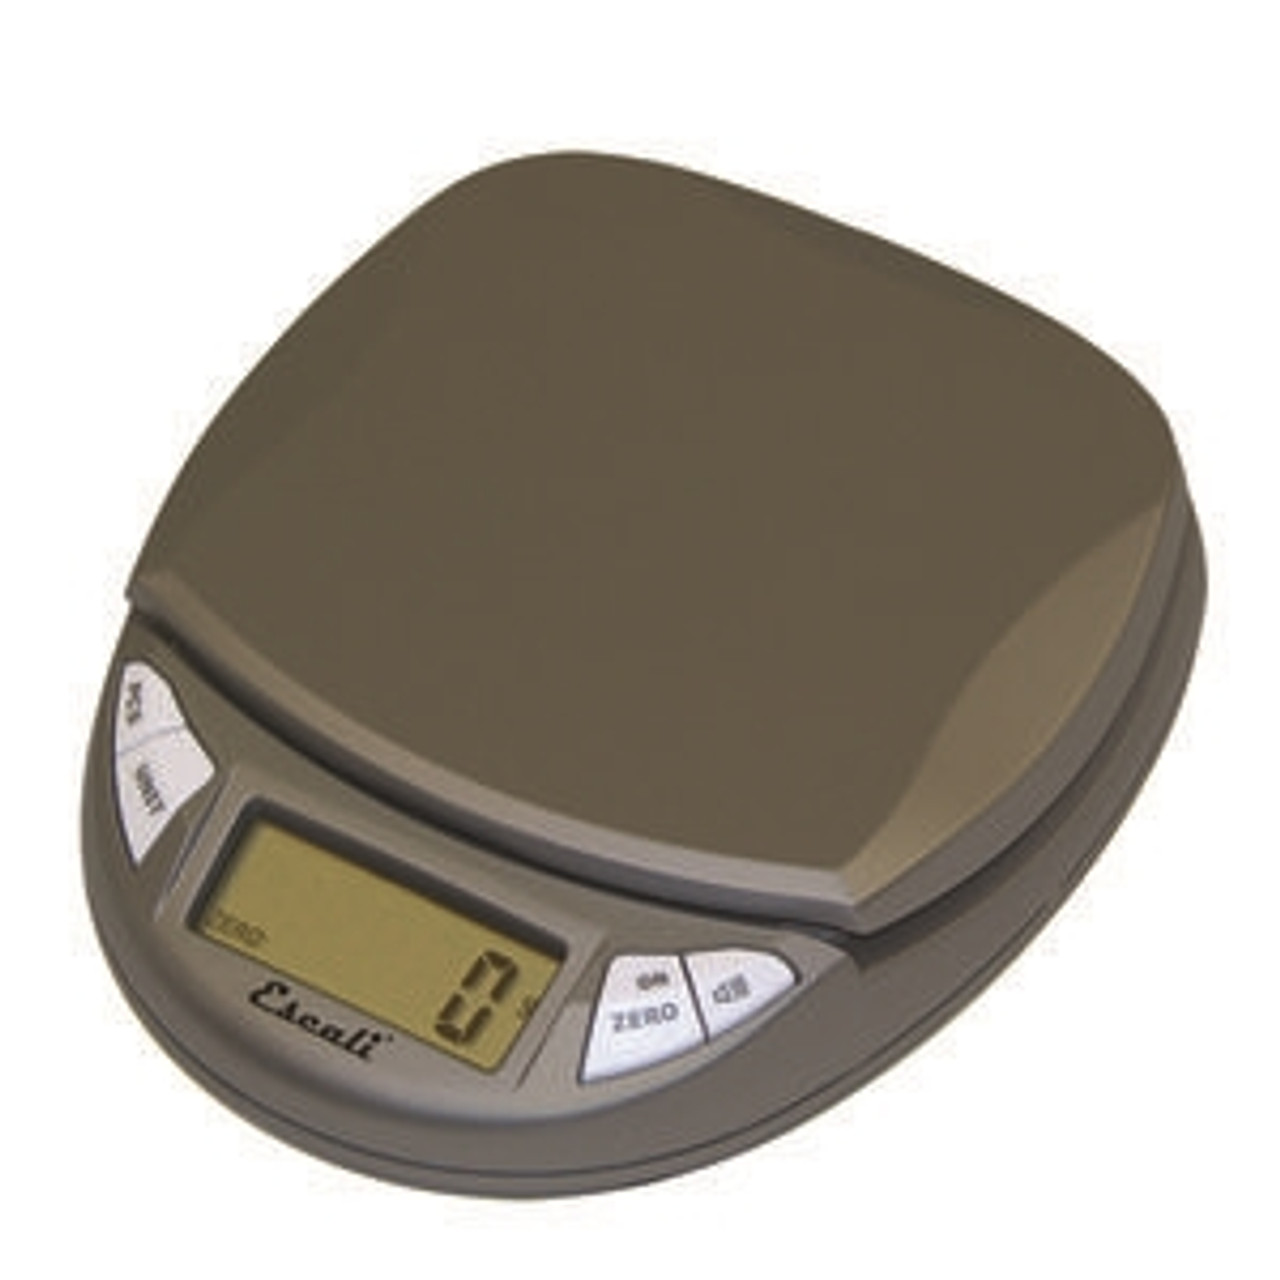 Escali Pico Pocket Digital Gram Scale